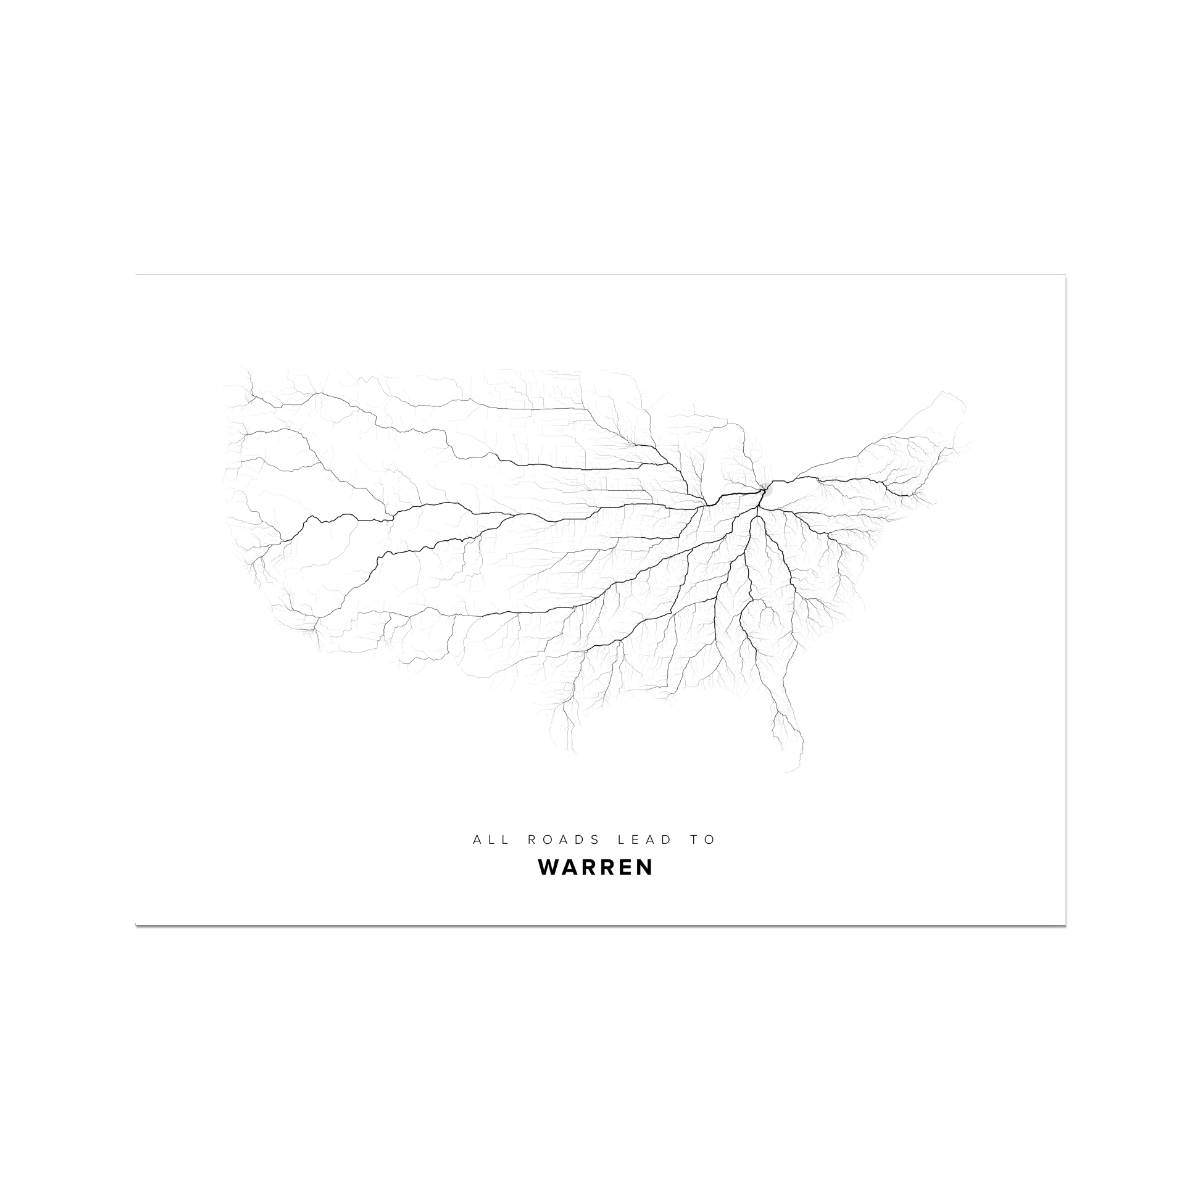 All roads lead to Warren (United States of America) Fine Art Map Print